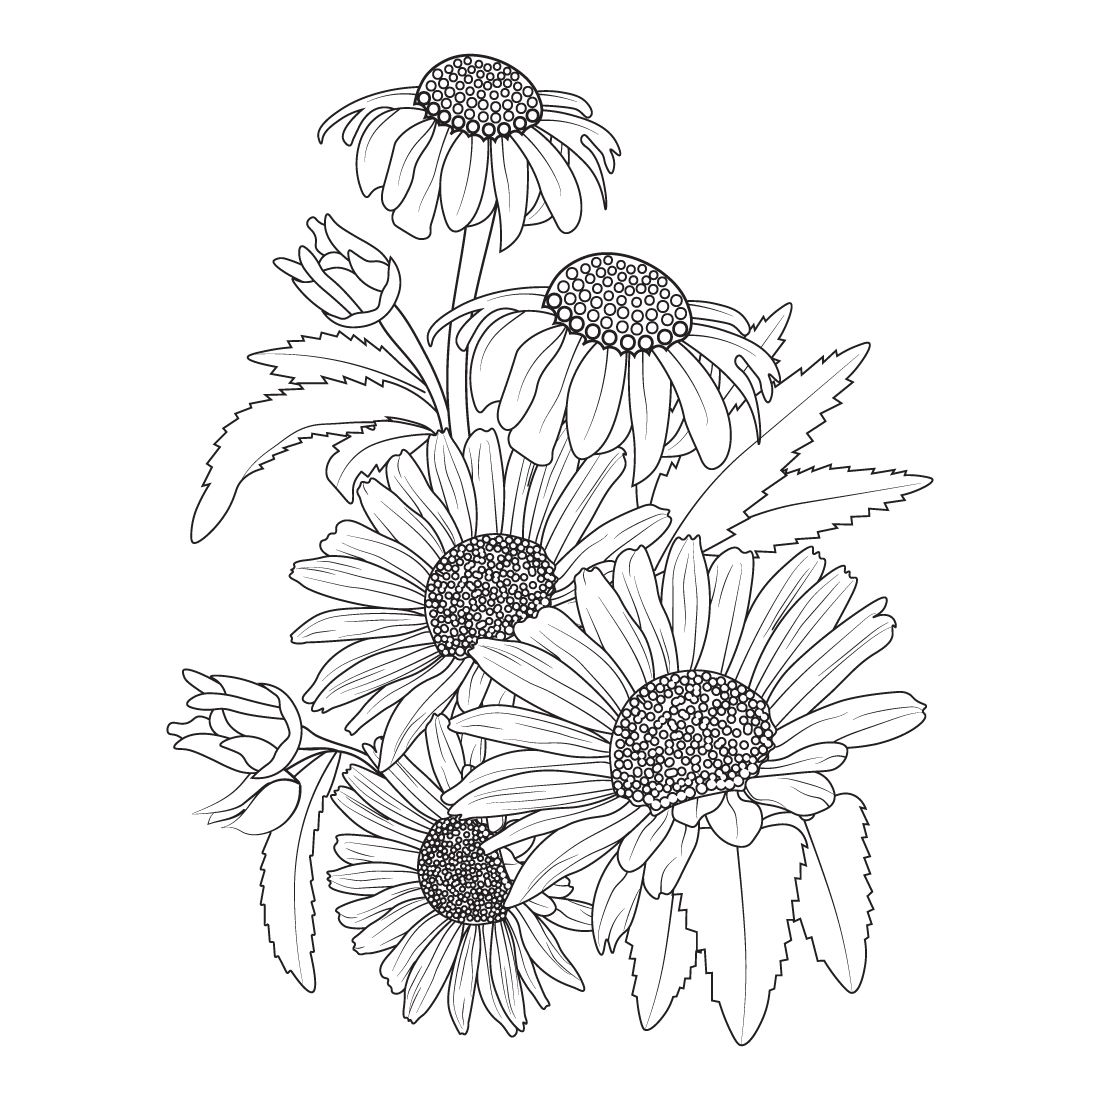 Premium Vector | Hand drawn beautiful sunflowers in minimalist style